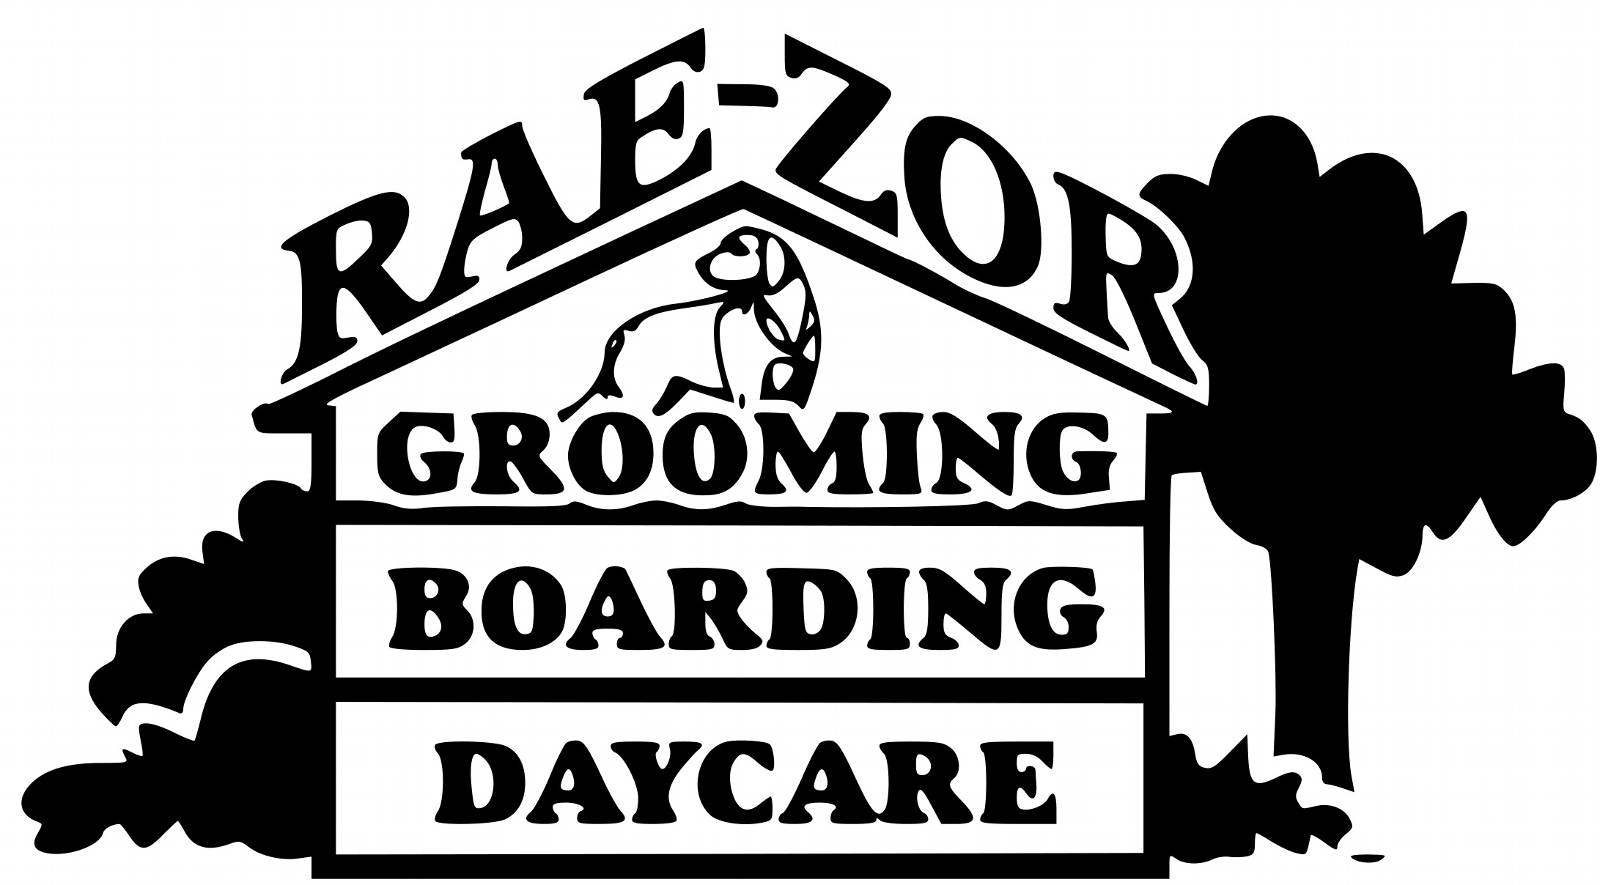 Link to Homepage of Rae-Zor Grooming Boarding Daycare